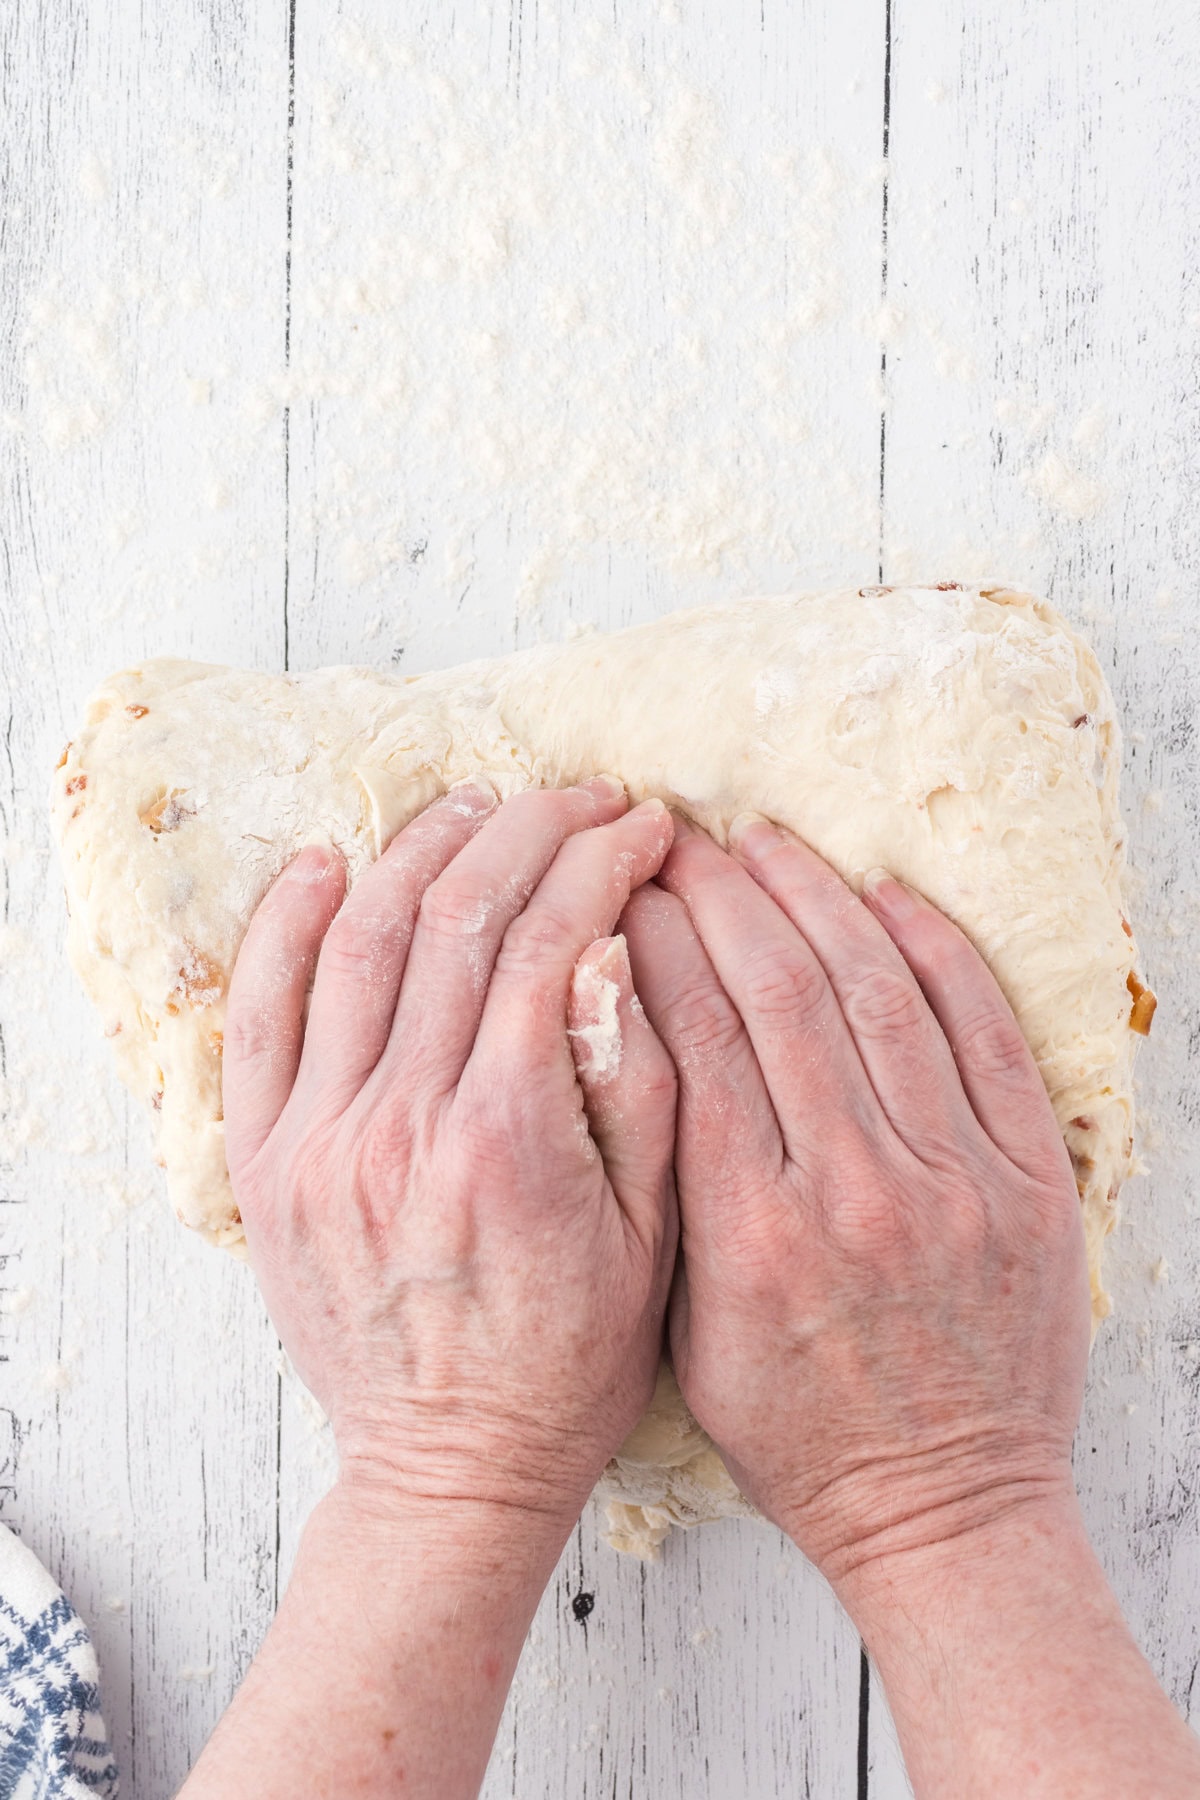 Hands kneadng the bread dough.